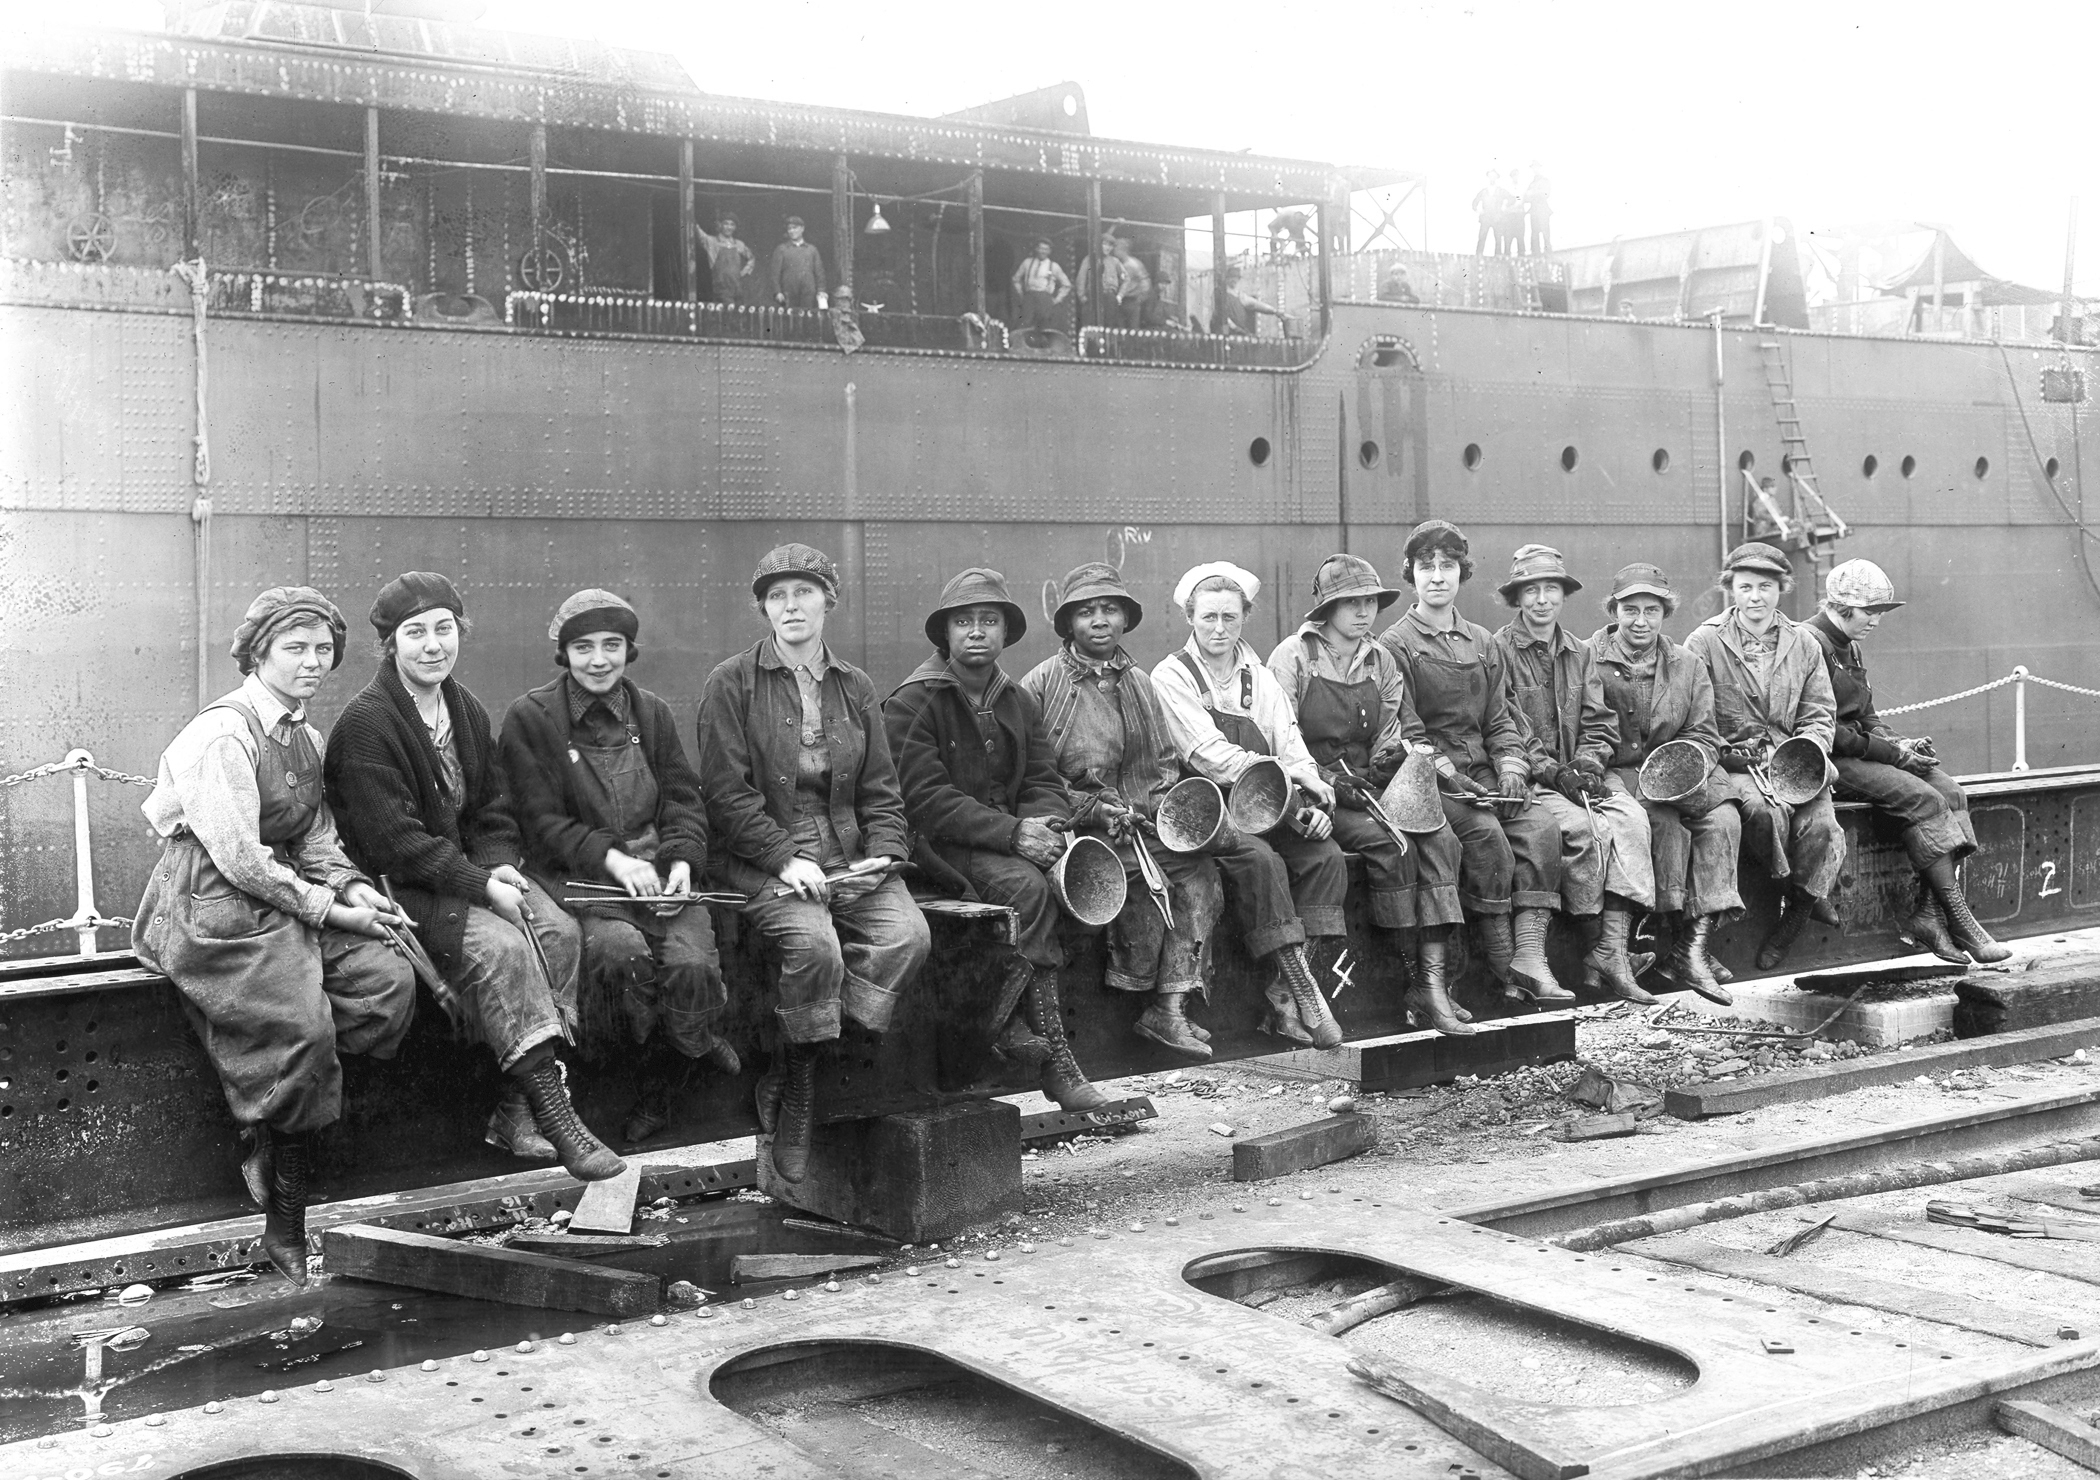 Thirteen women rivet heaters and passers at the Puget Sound Naval Shipyard, Bremerton, Washington, United States, 1919.